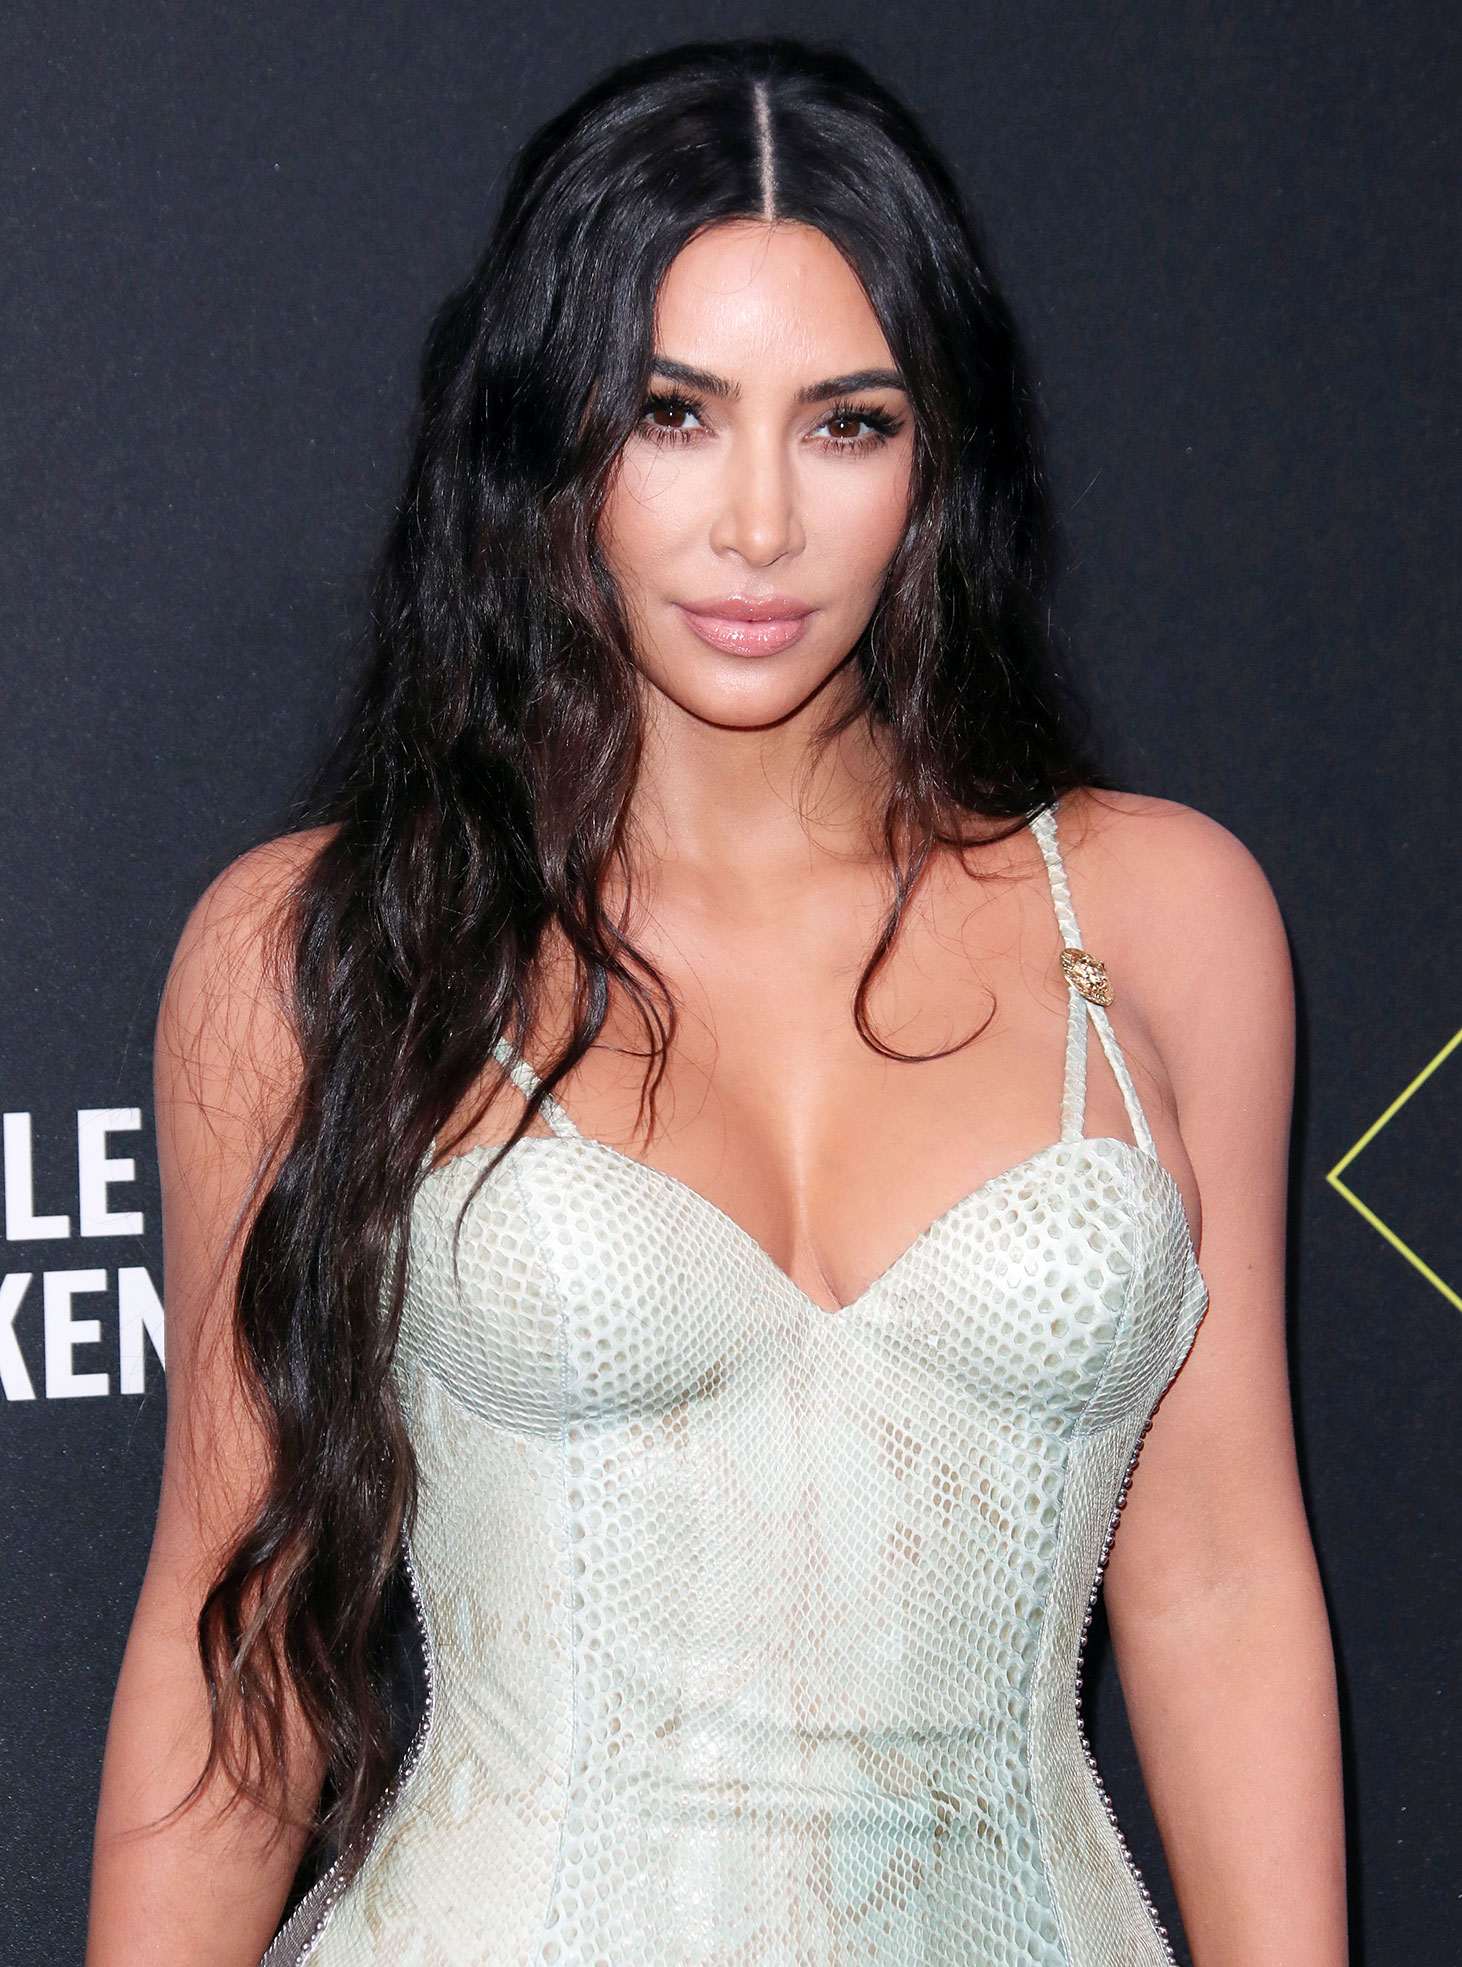 See Whats Inside Kim Kardashian Walk-In Fridge